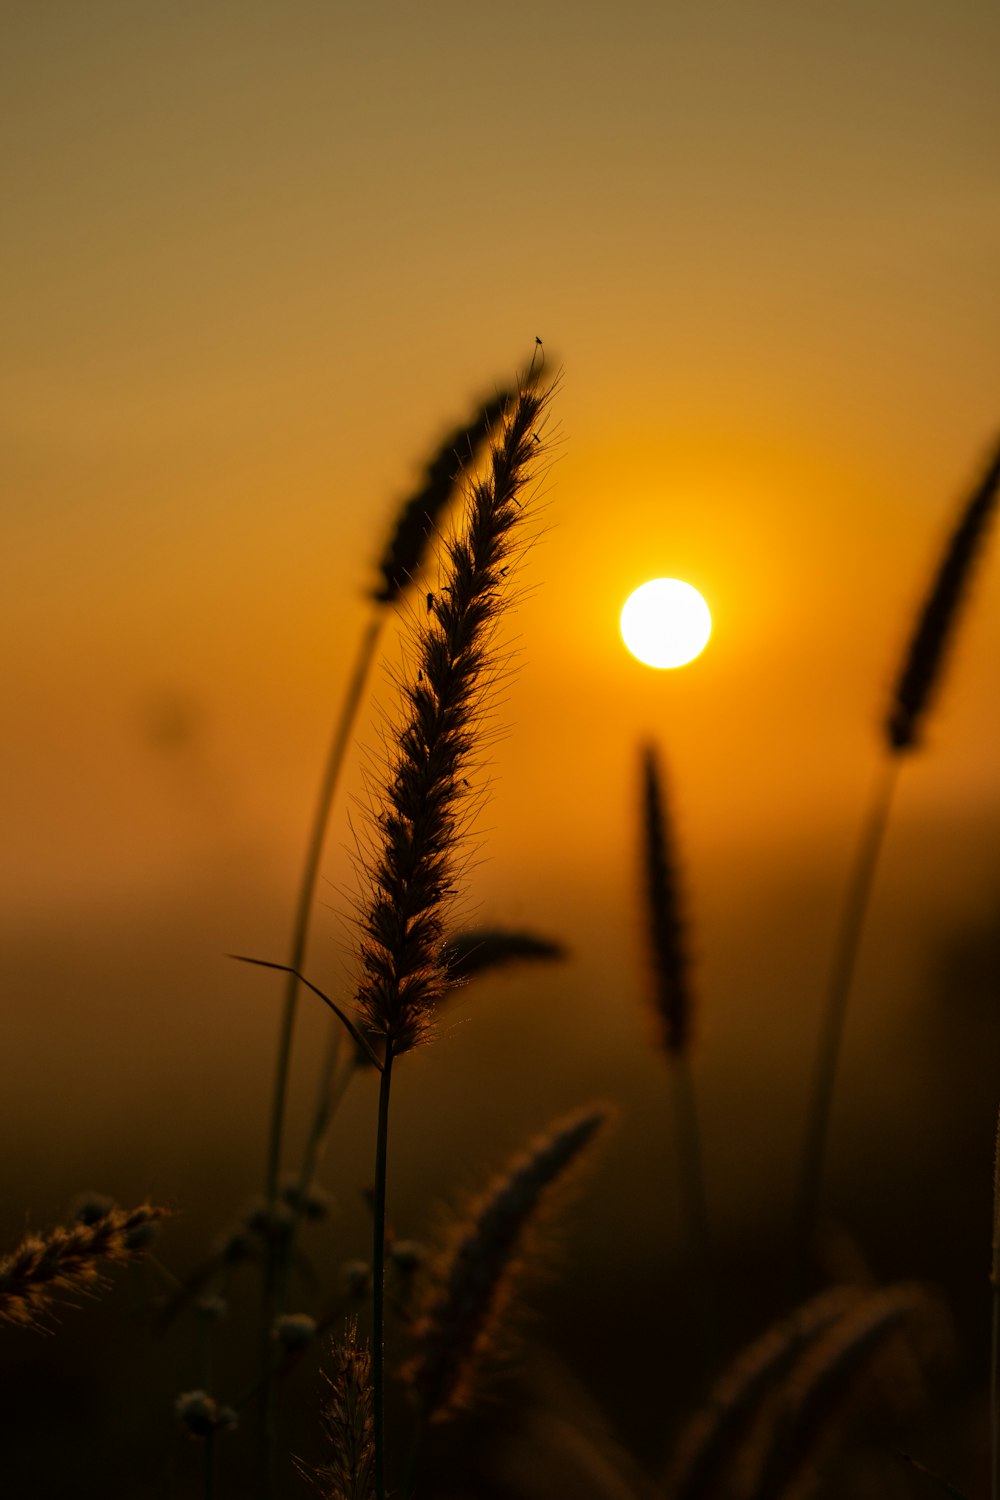 green wheat field during sunset photo – Free Grass Image on Unsplash